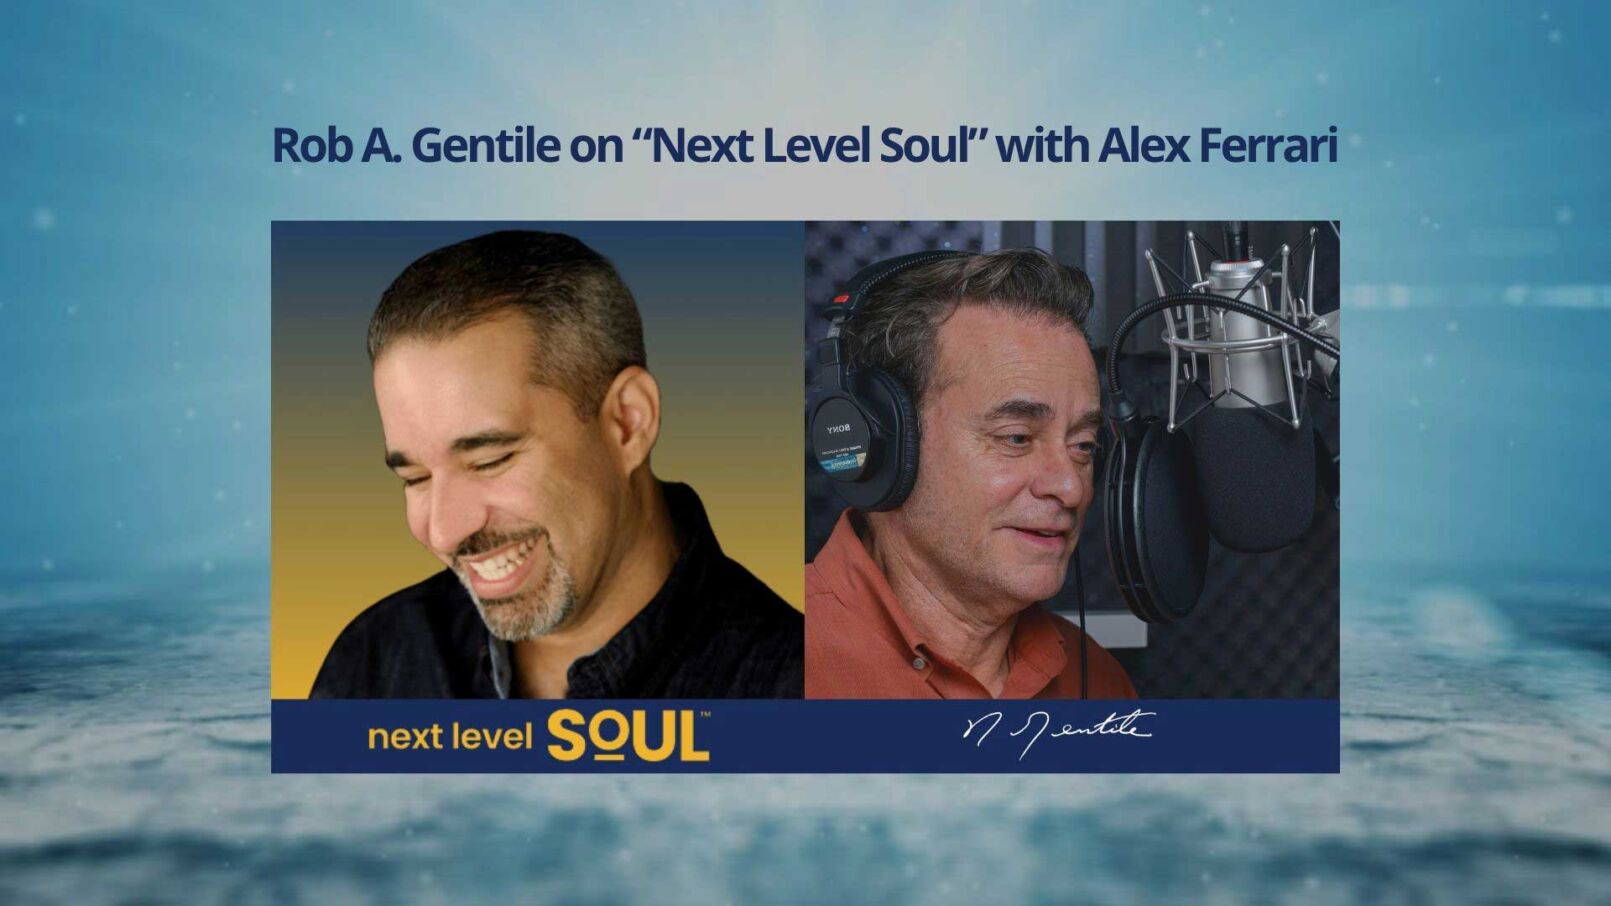 Rob A. Gentile on “Next Level Soul” with Alex Ferrari